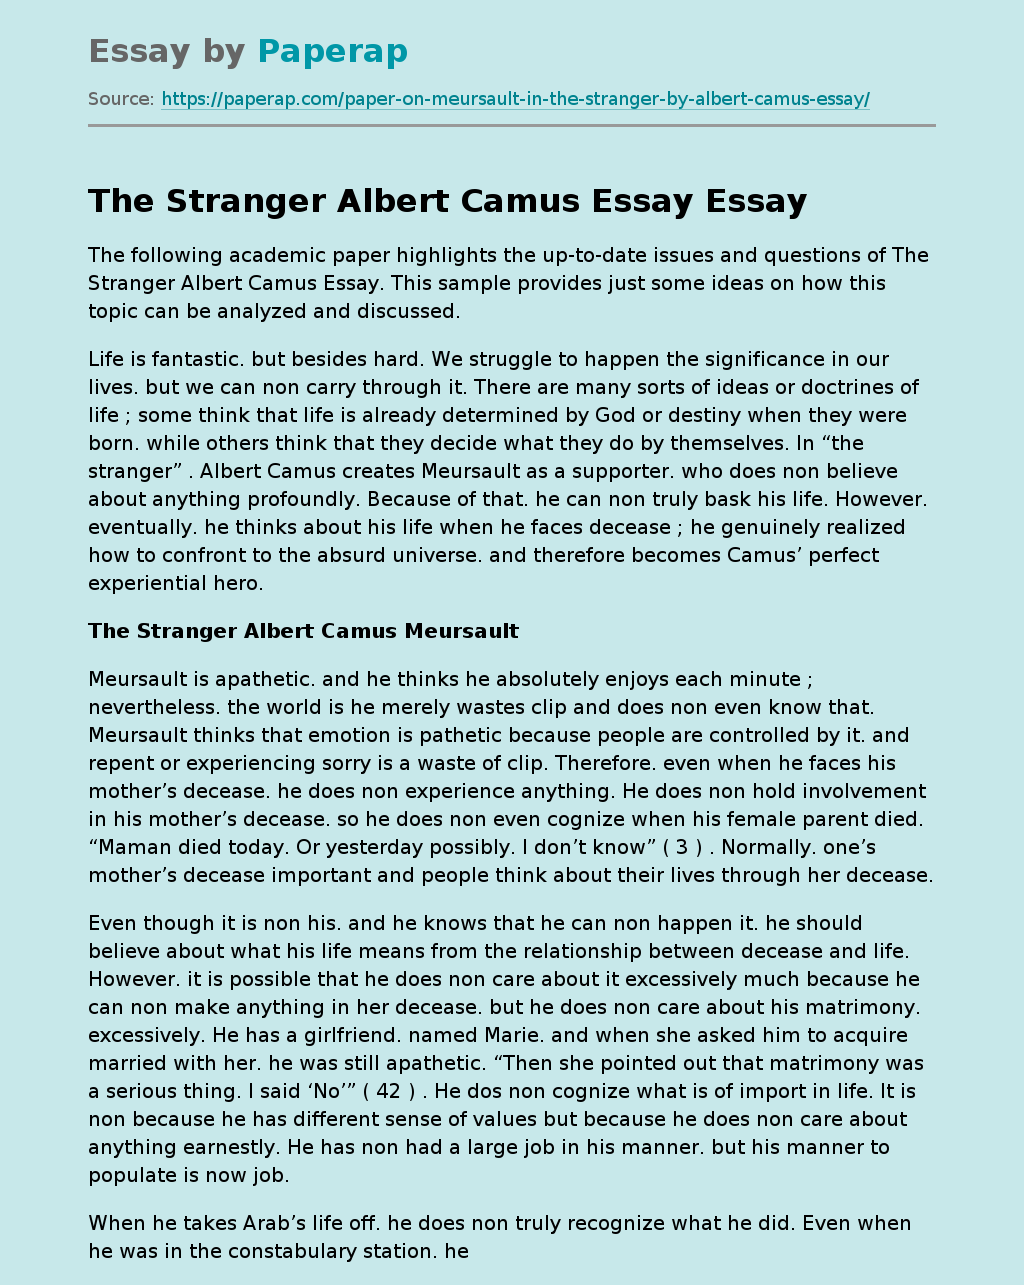 The Stranger Albert Camus Essay